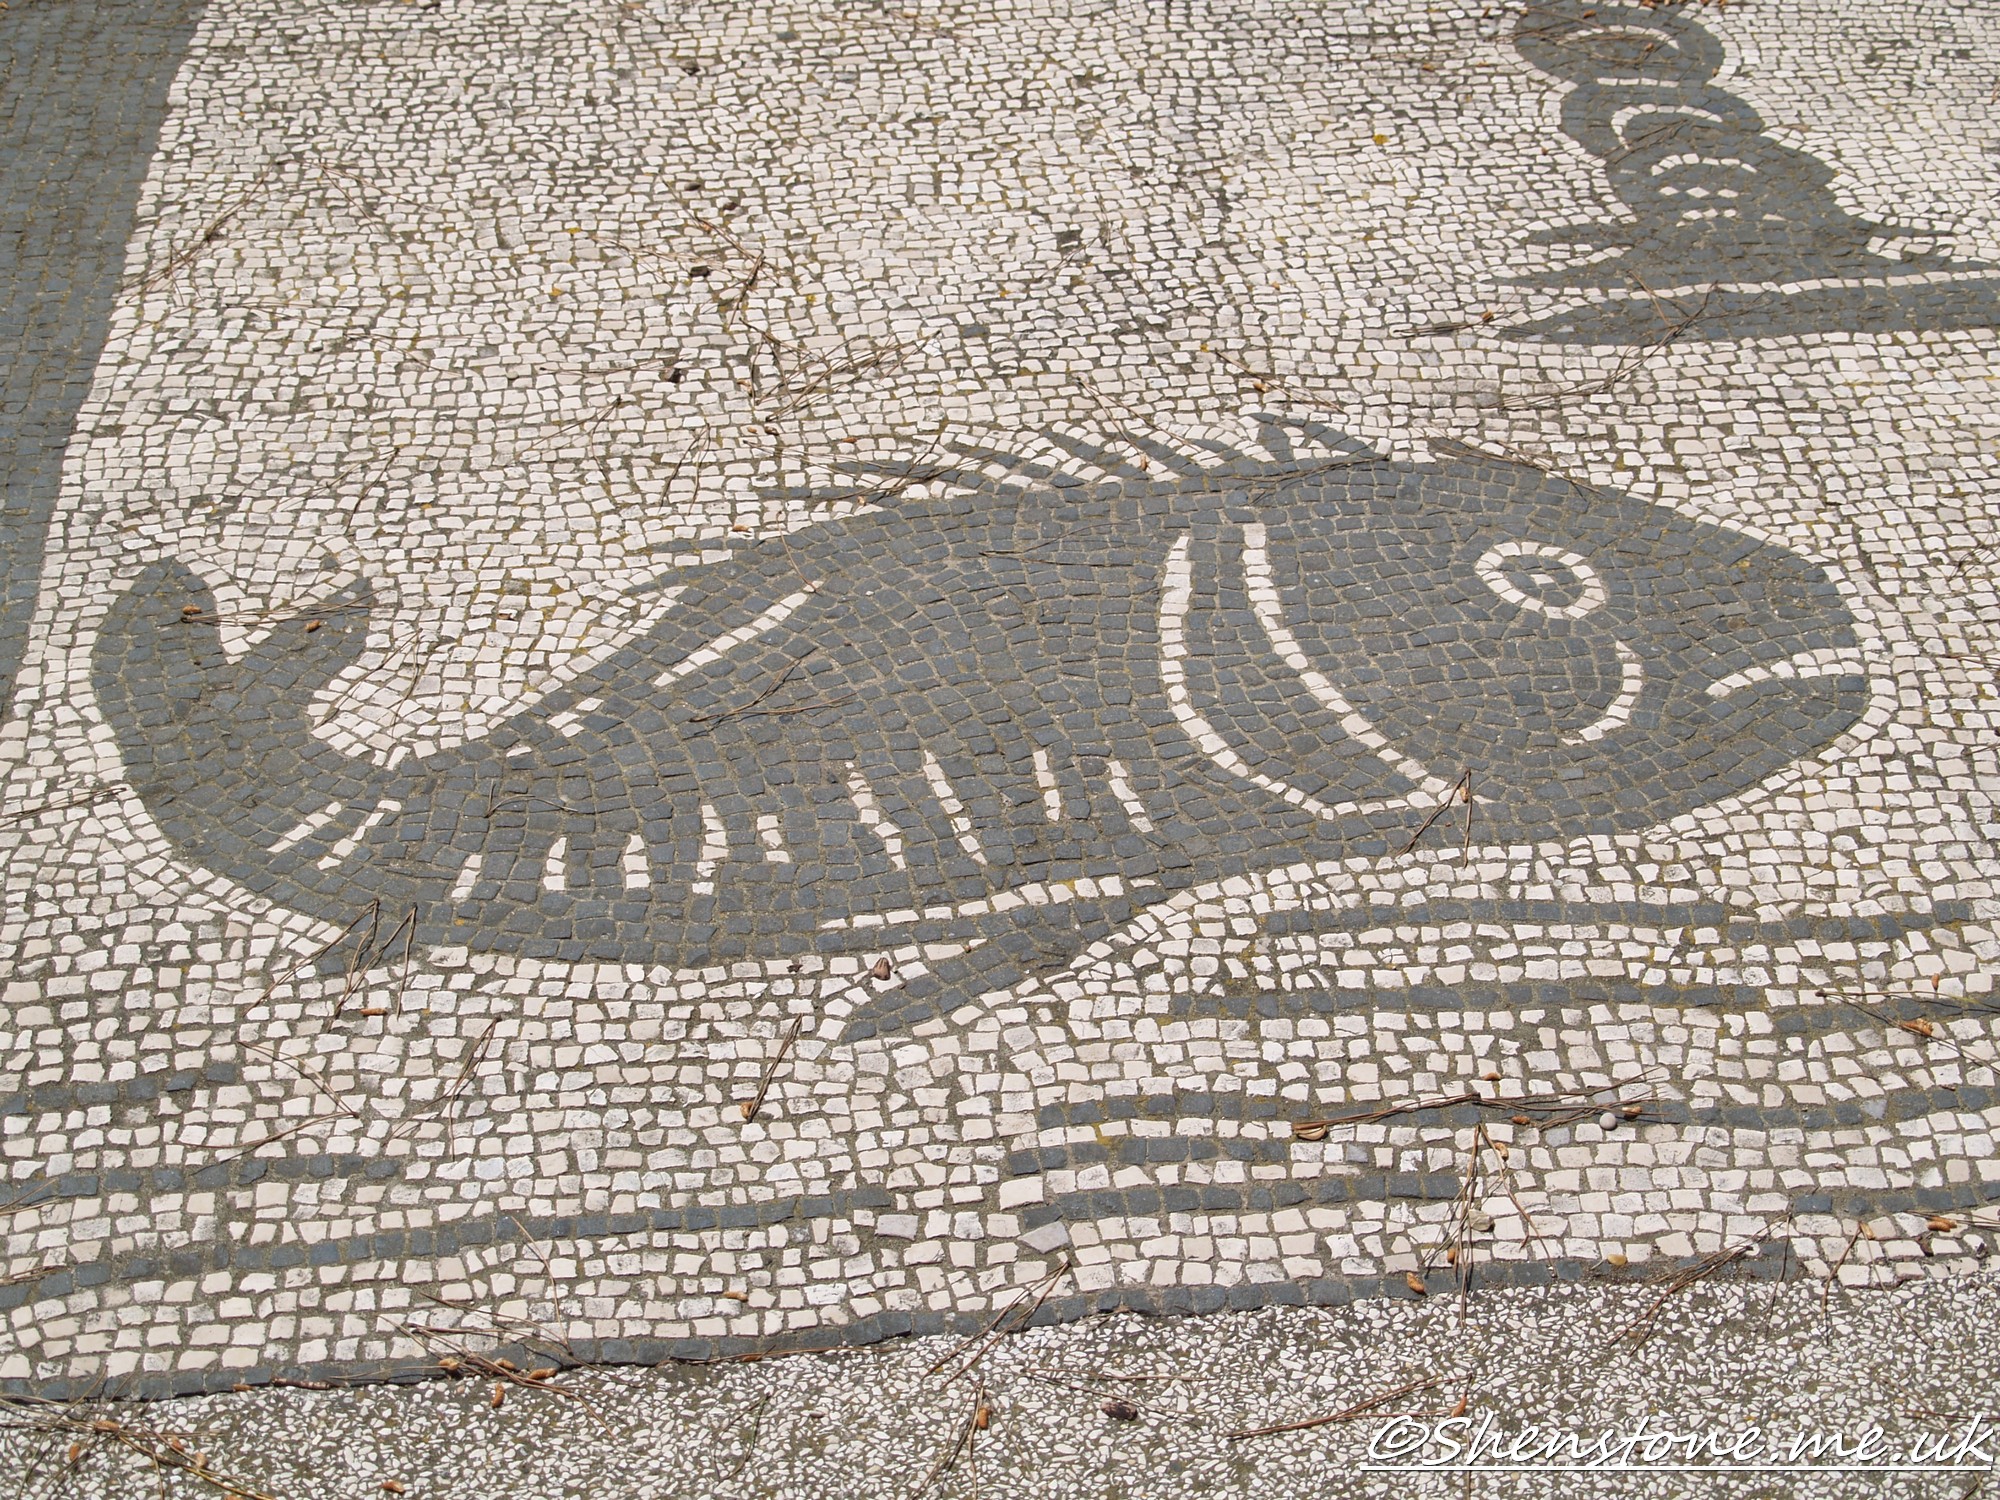 Mosaic fish, Ostia Antica, Italy